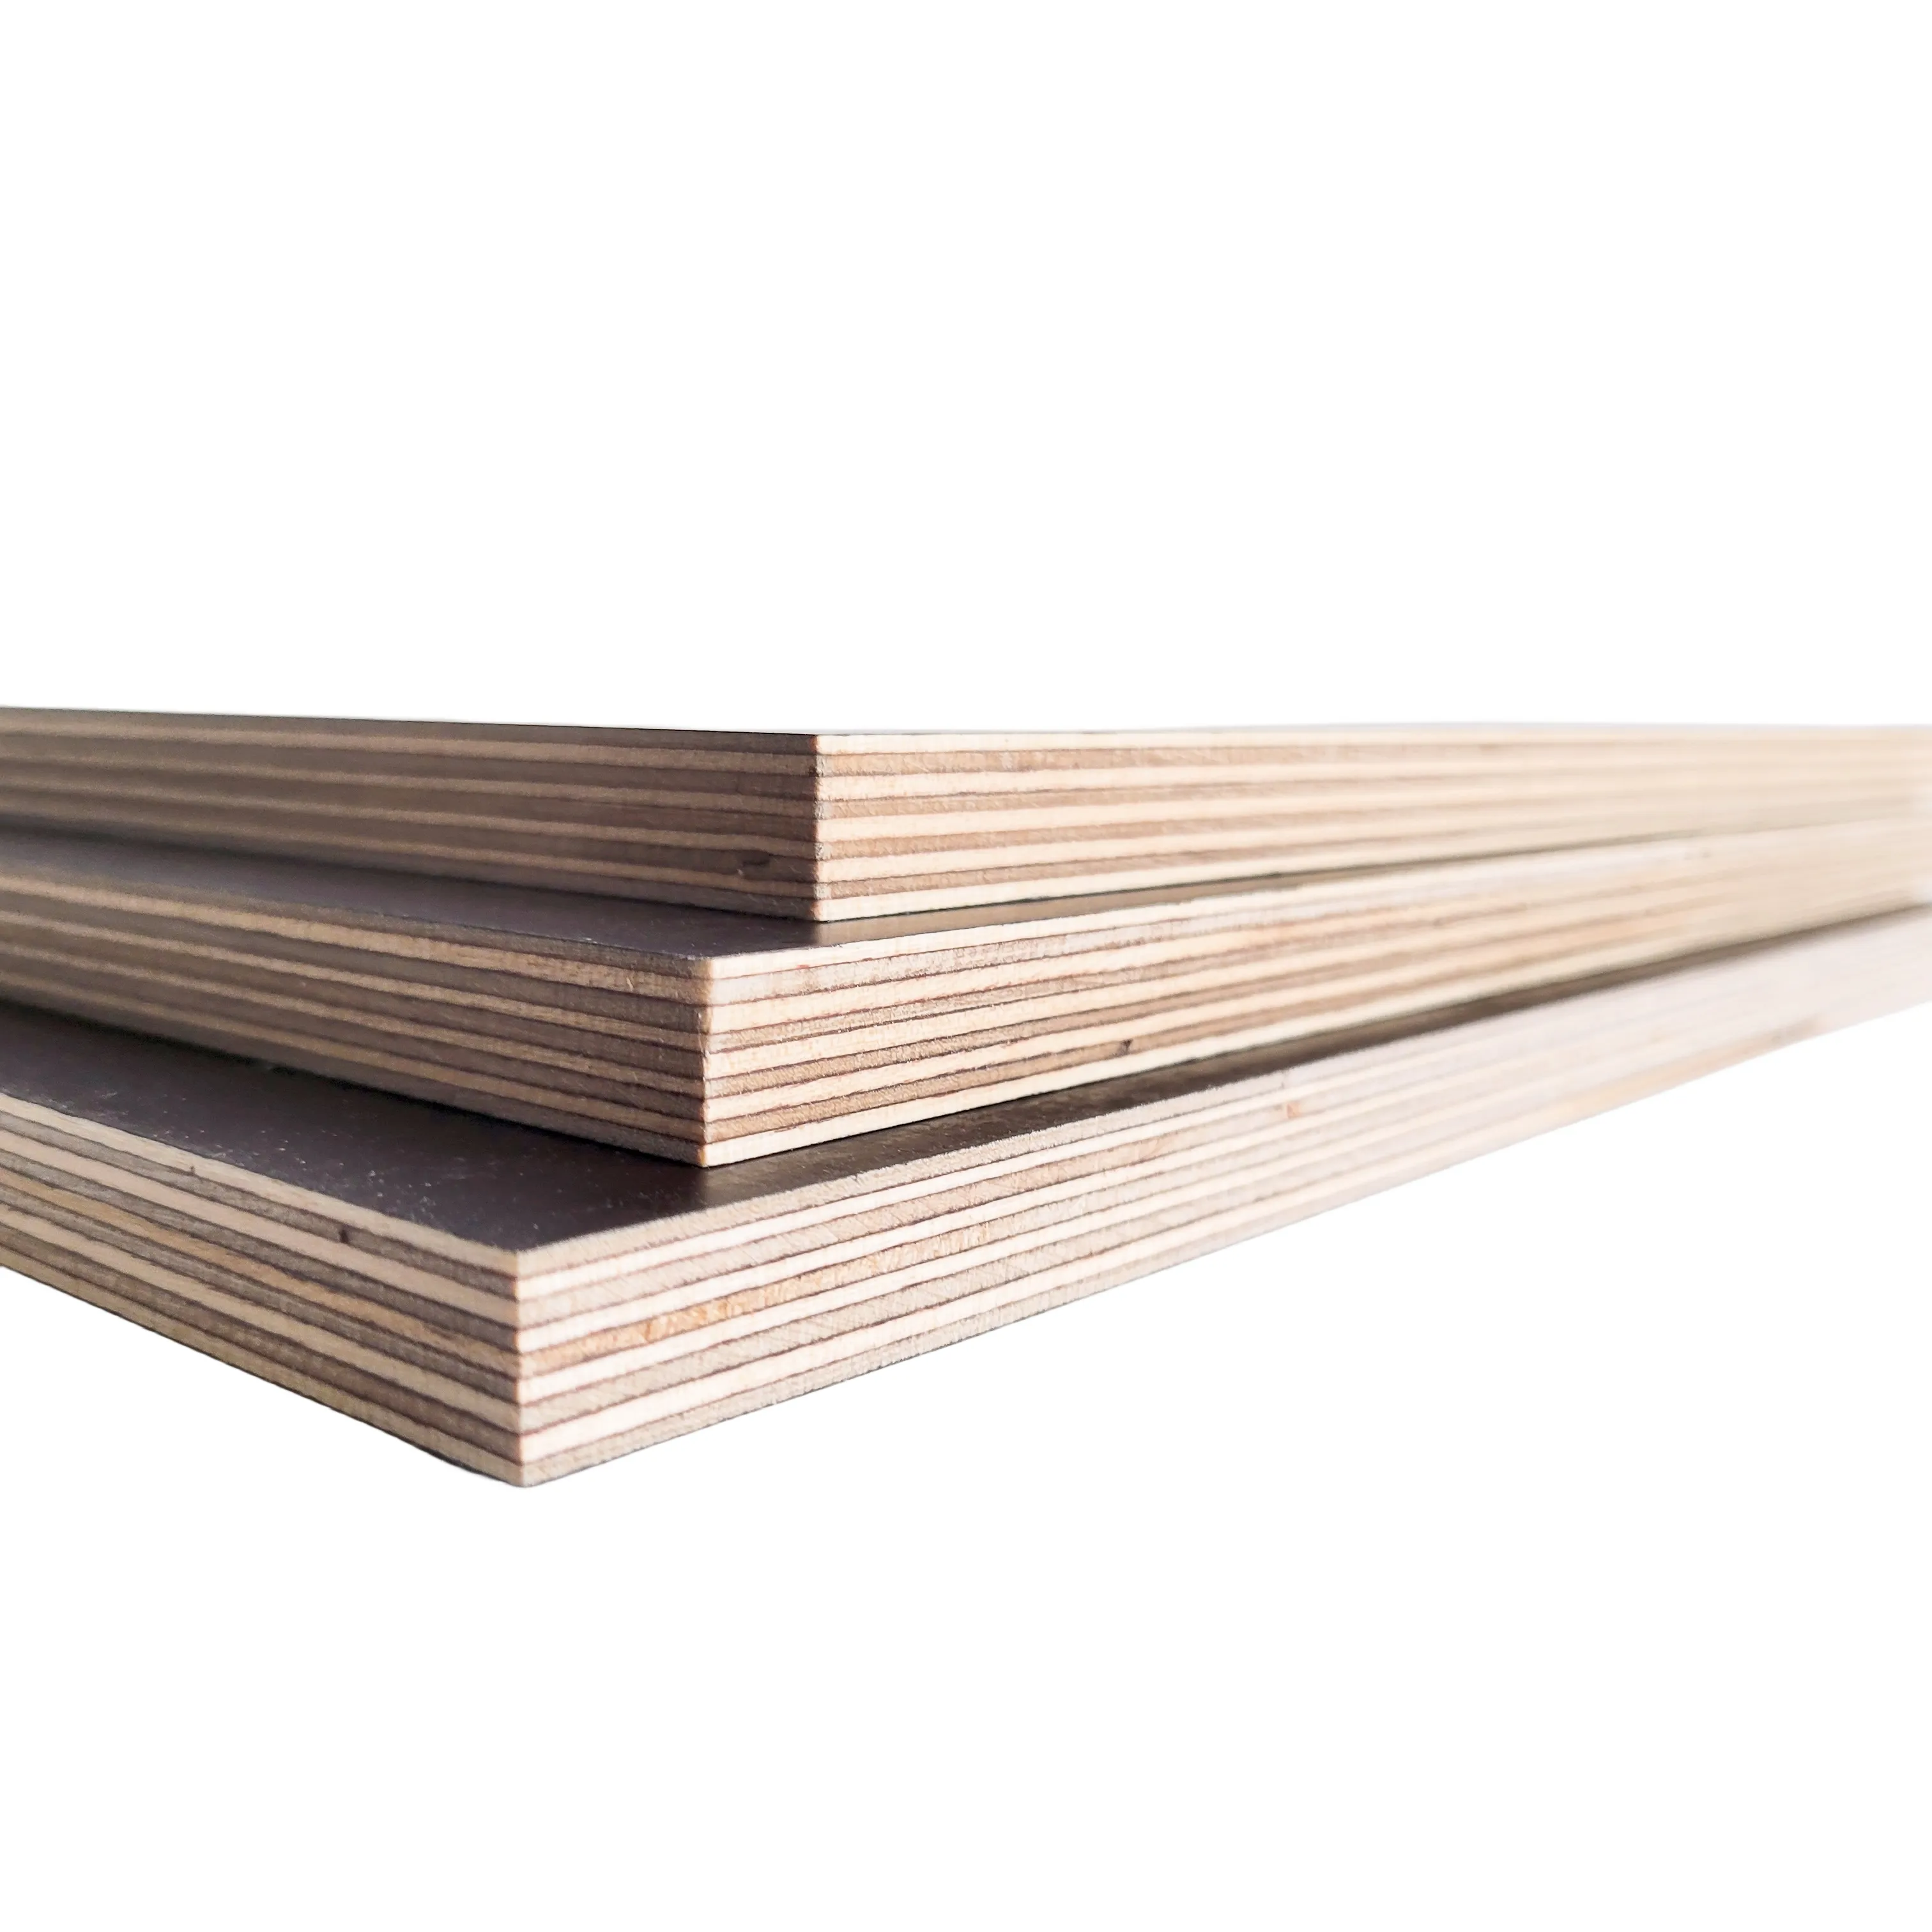 12mm Full Birch Core Plywood / 12mm Baltic Birch Plywood